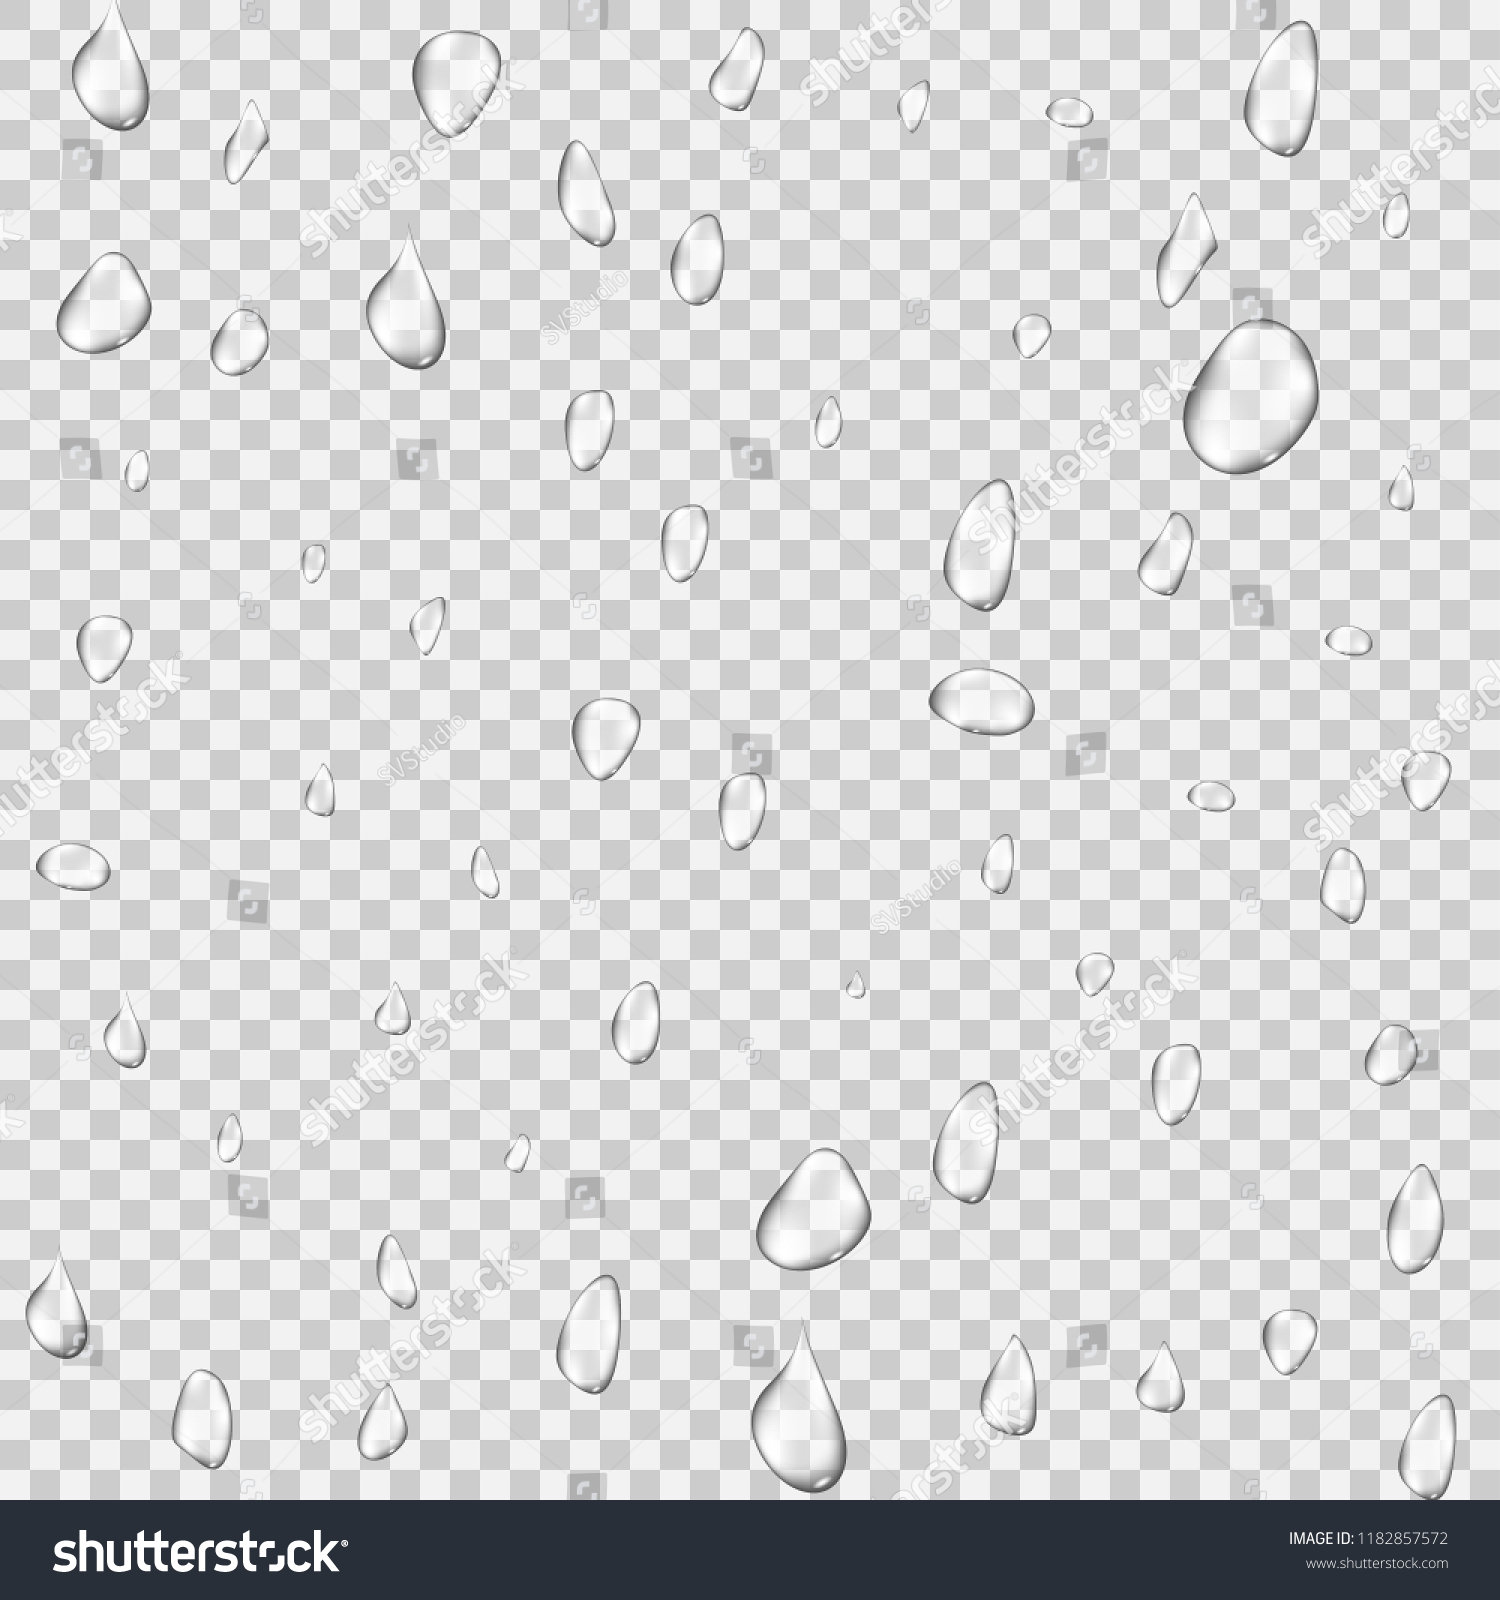 Realistic rain water drops transparent background. Reflection clean drop condensation bubble set. Vector illustration #1182857572